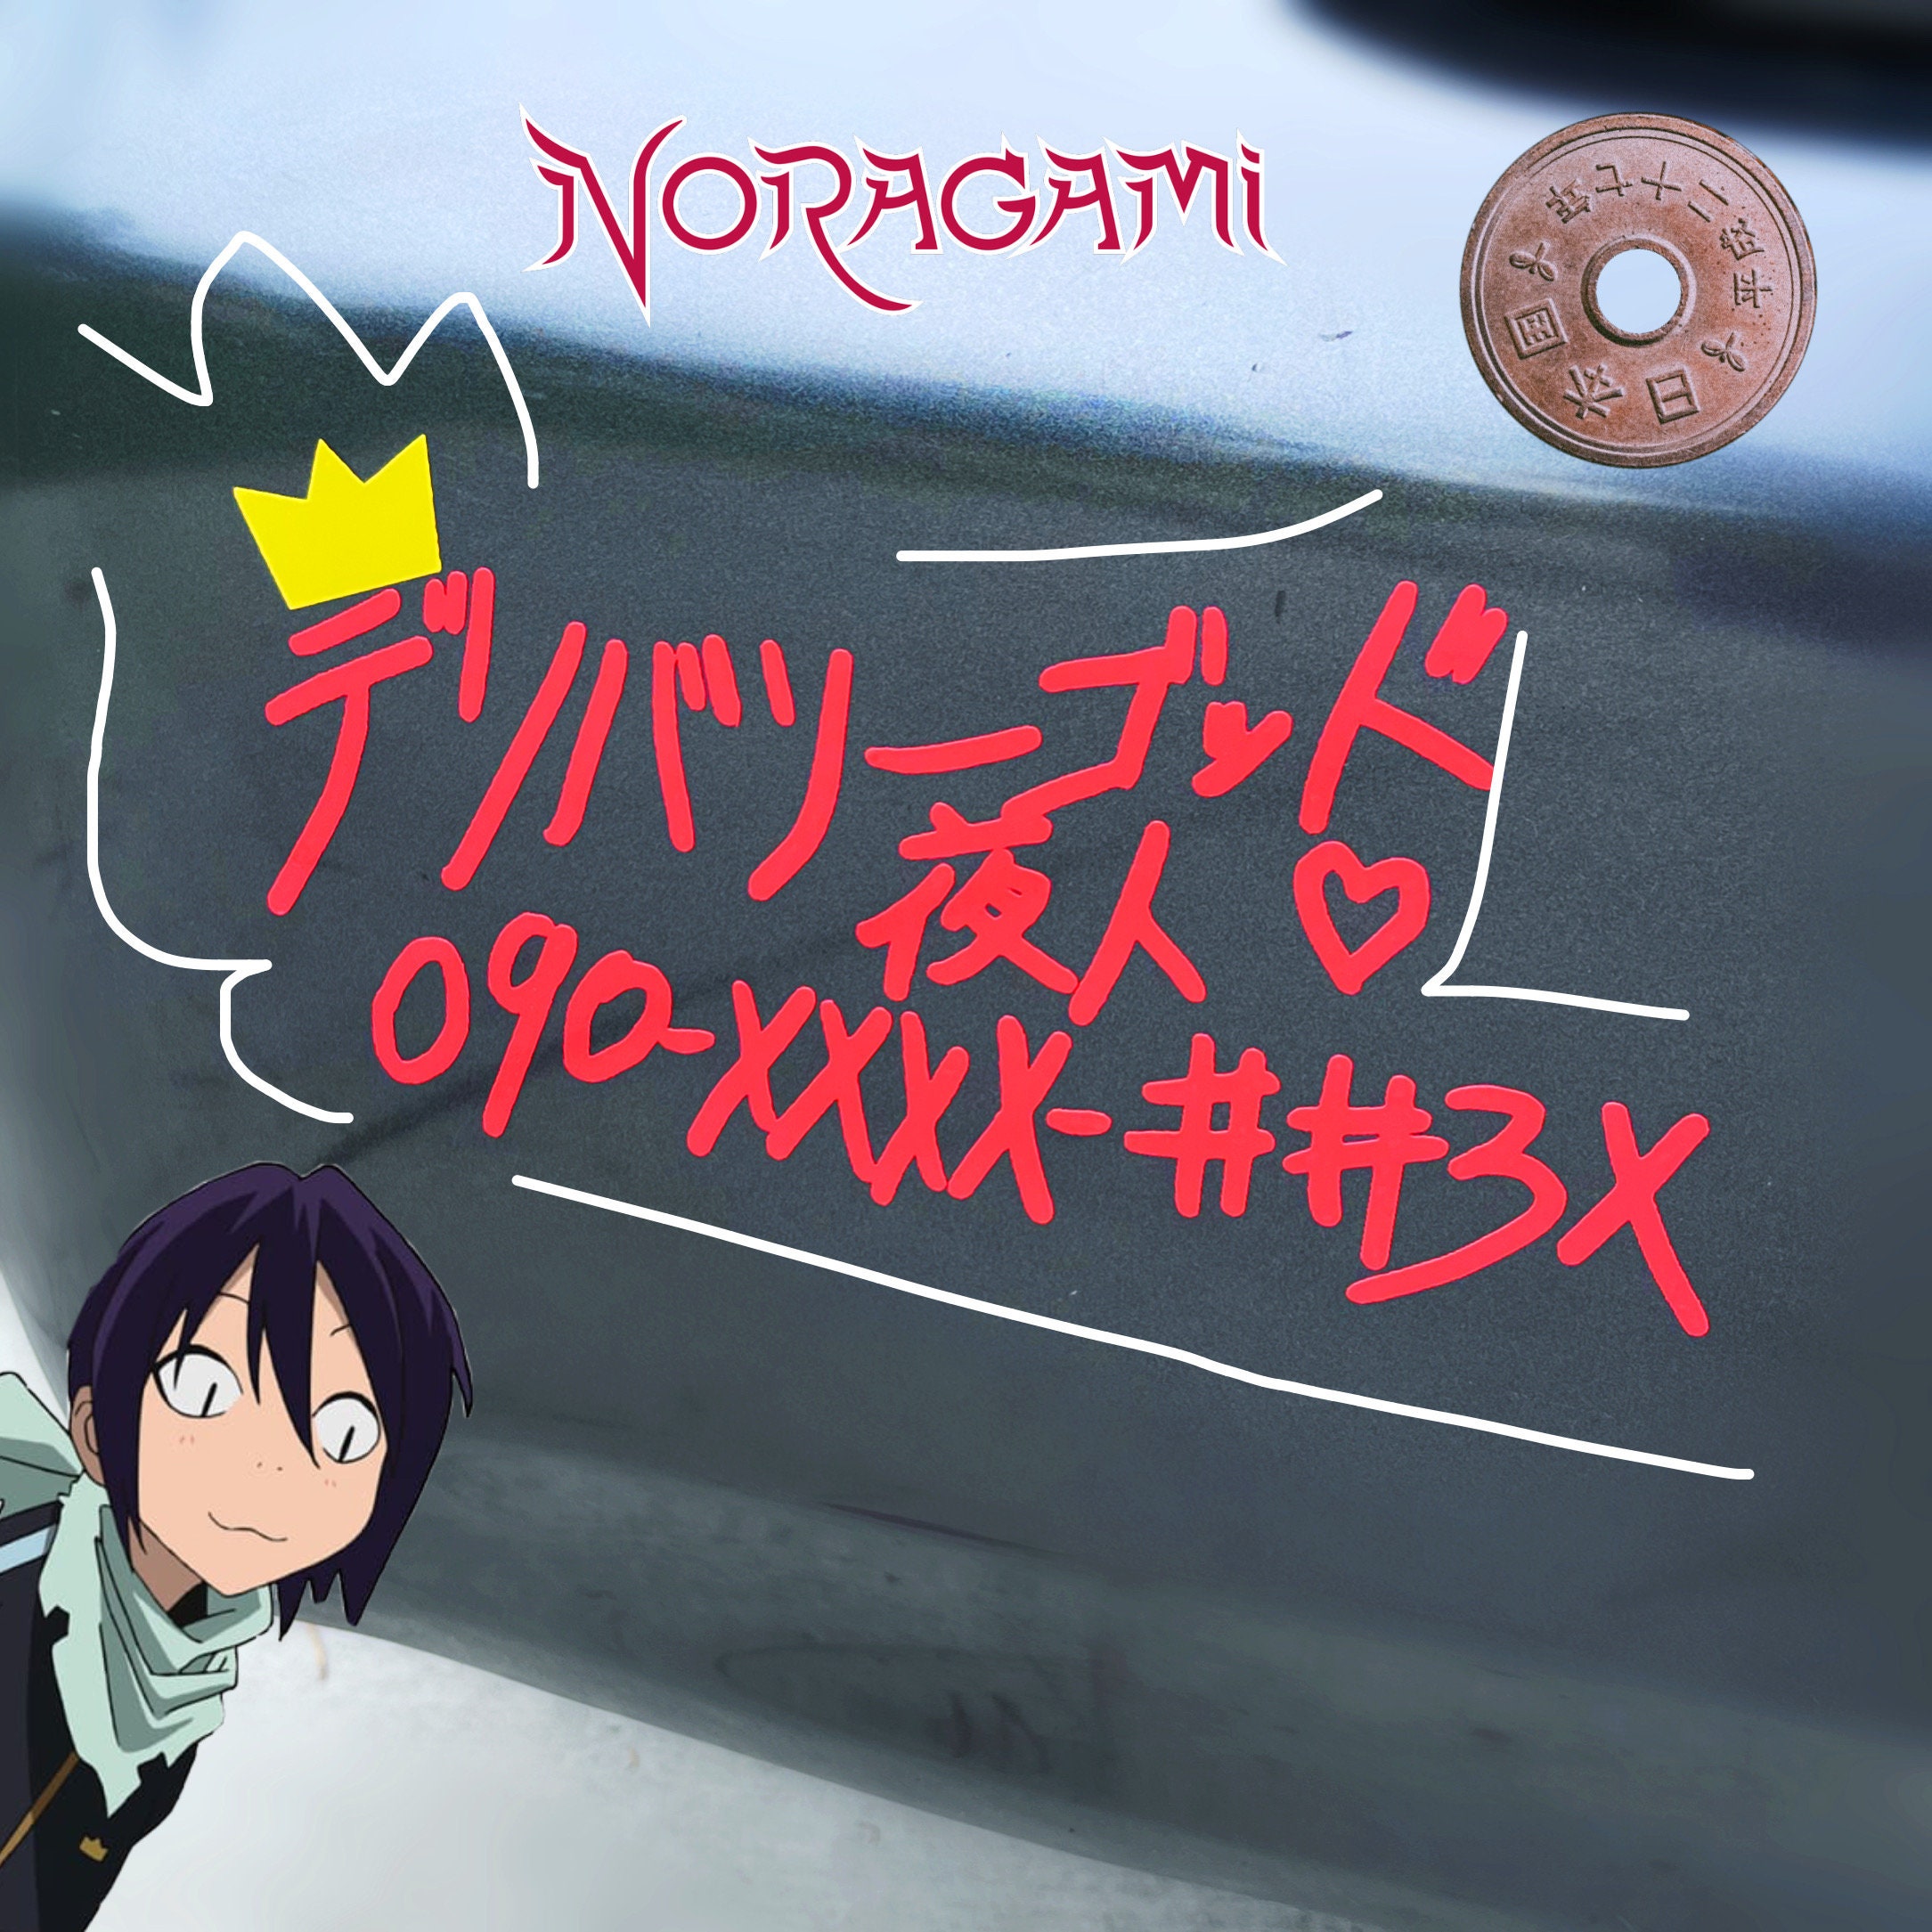 Noragami Yato Stray God  Sticker for Sale by nAslan21